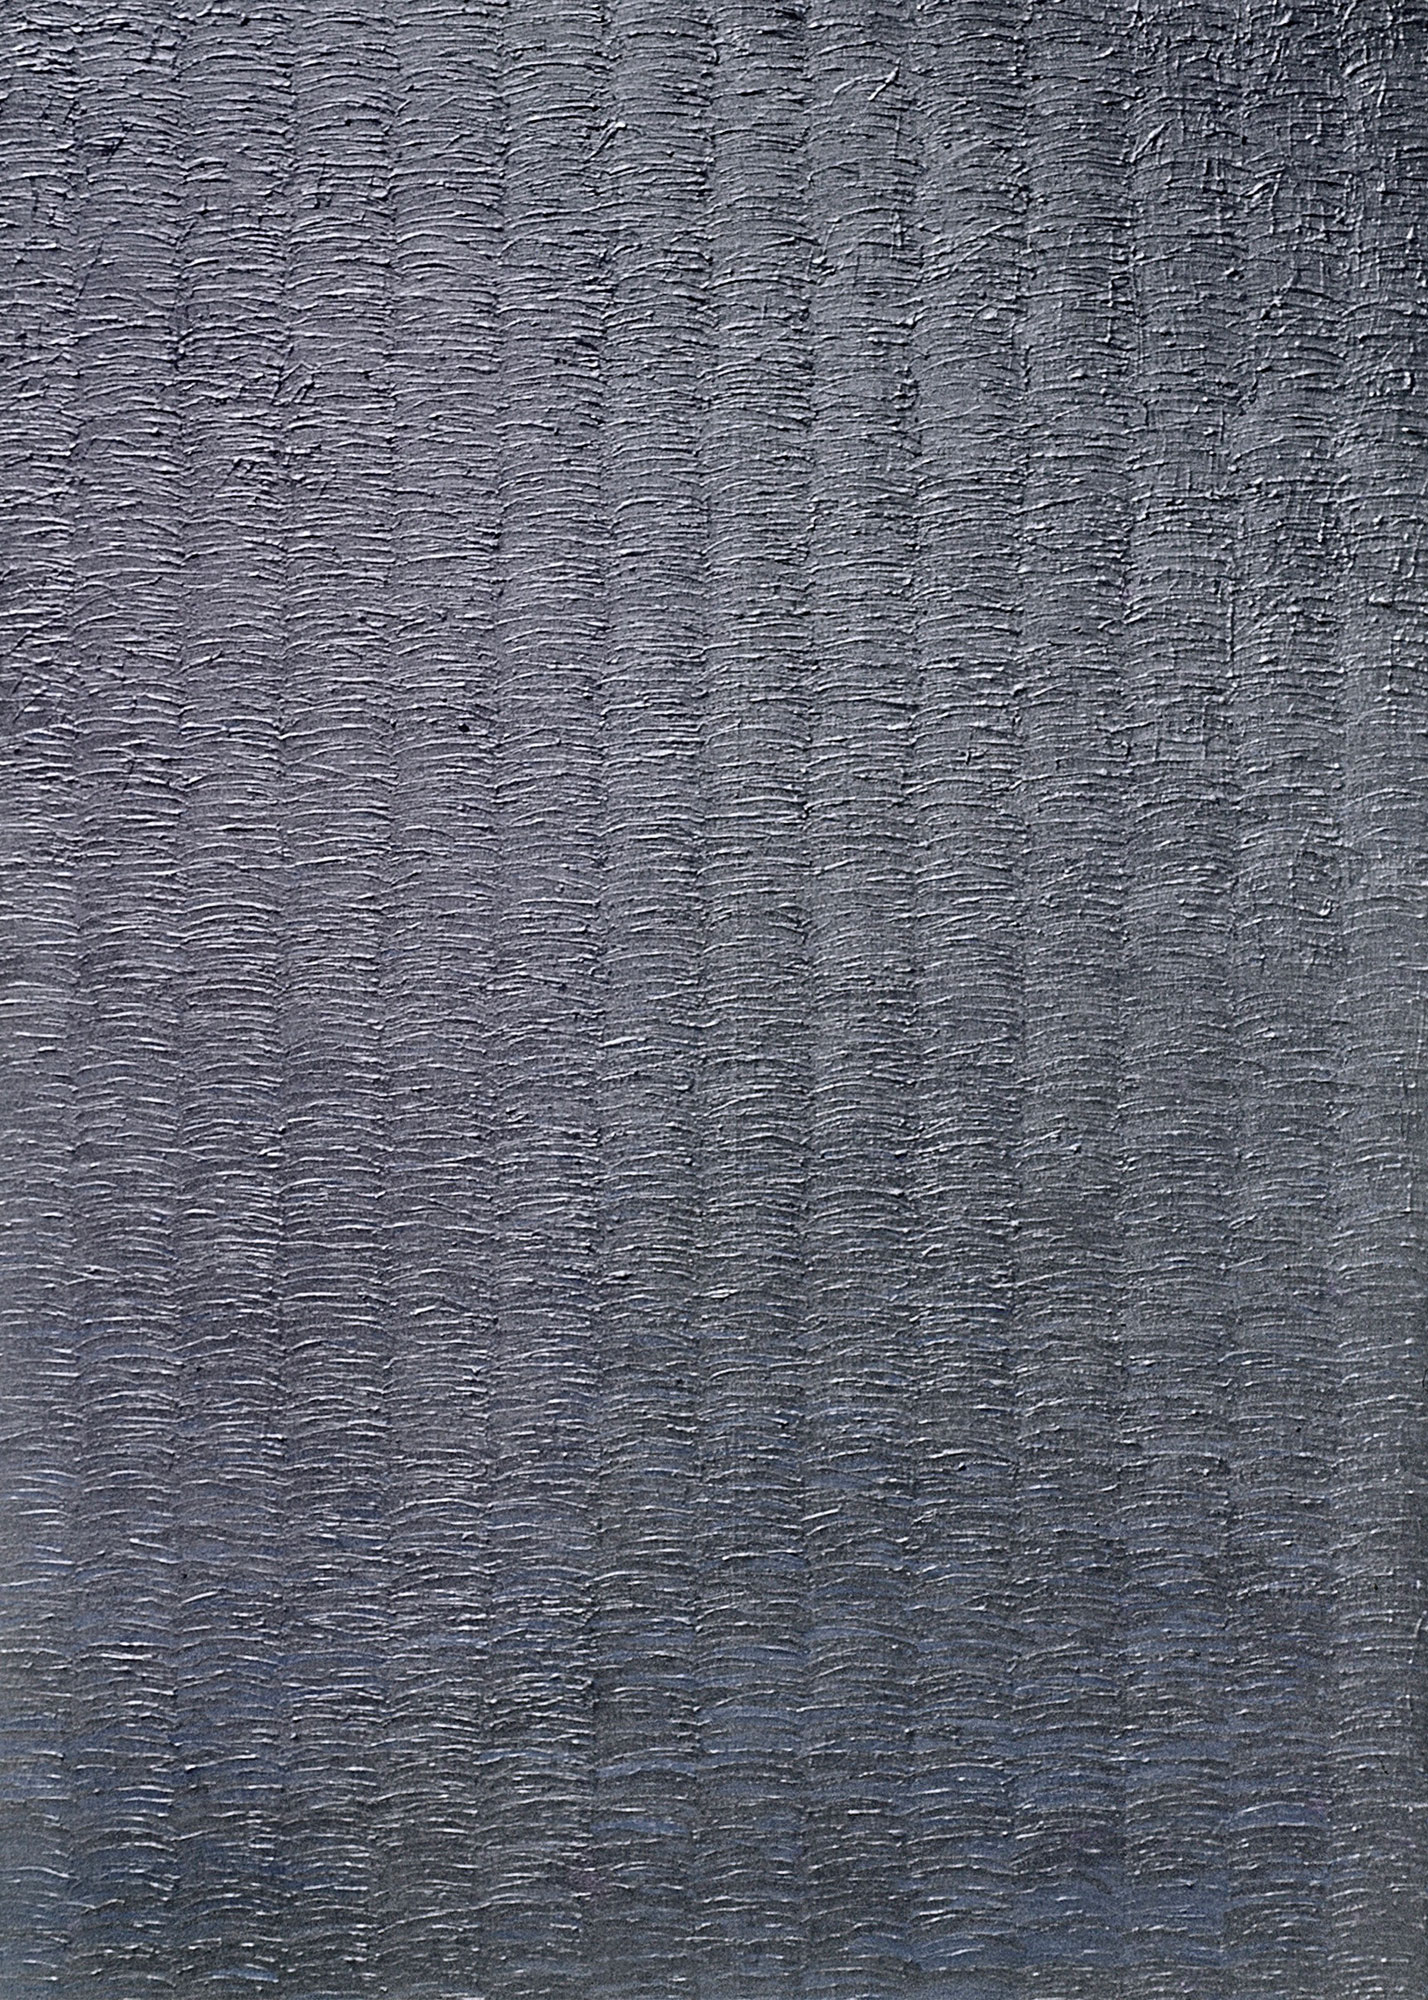 Kenneth Dingwall, Grey Covering Blue, 1976, acrylic on canvas, 109cm x 79cm